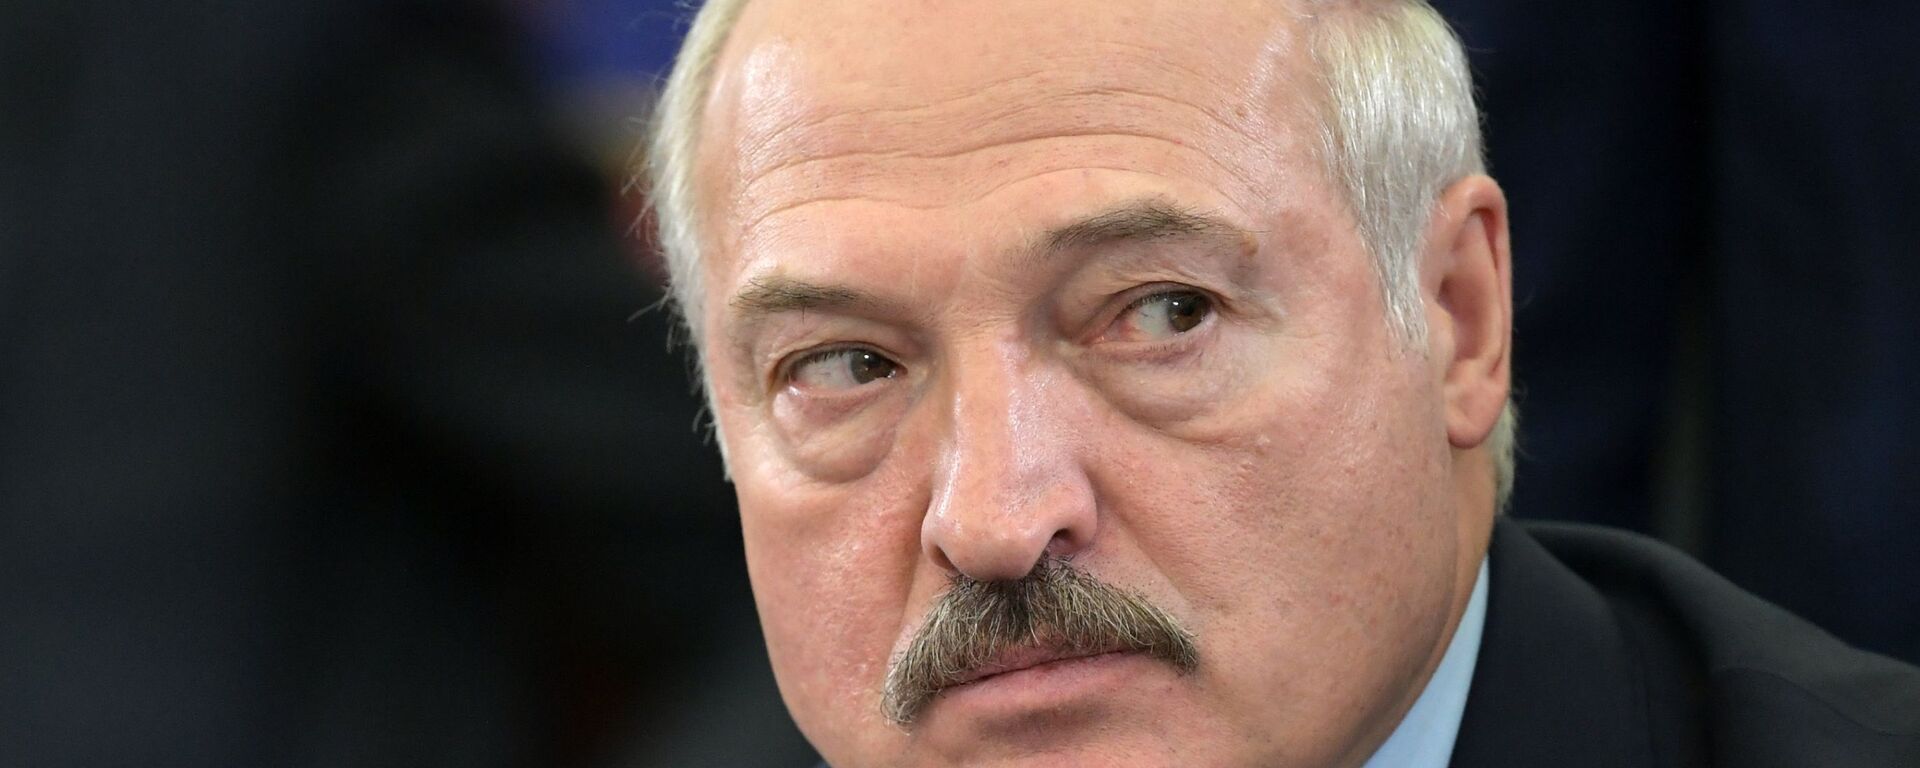 Президент Белоруссии Александр Лукашенко - Sputnik Узбекистан, 1920, 18.09.2020